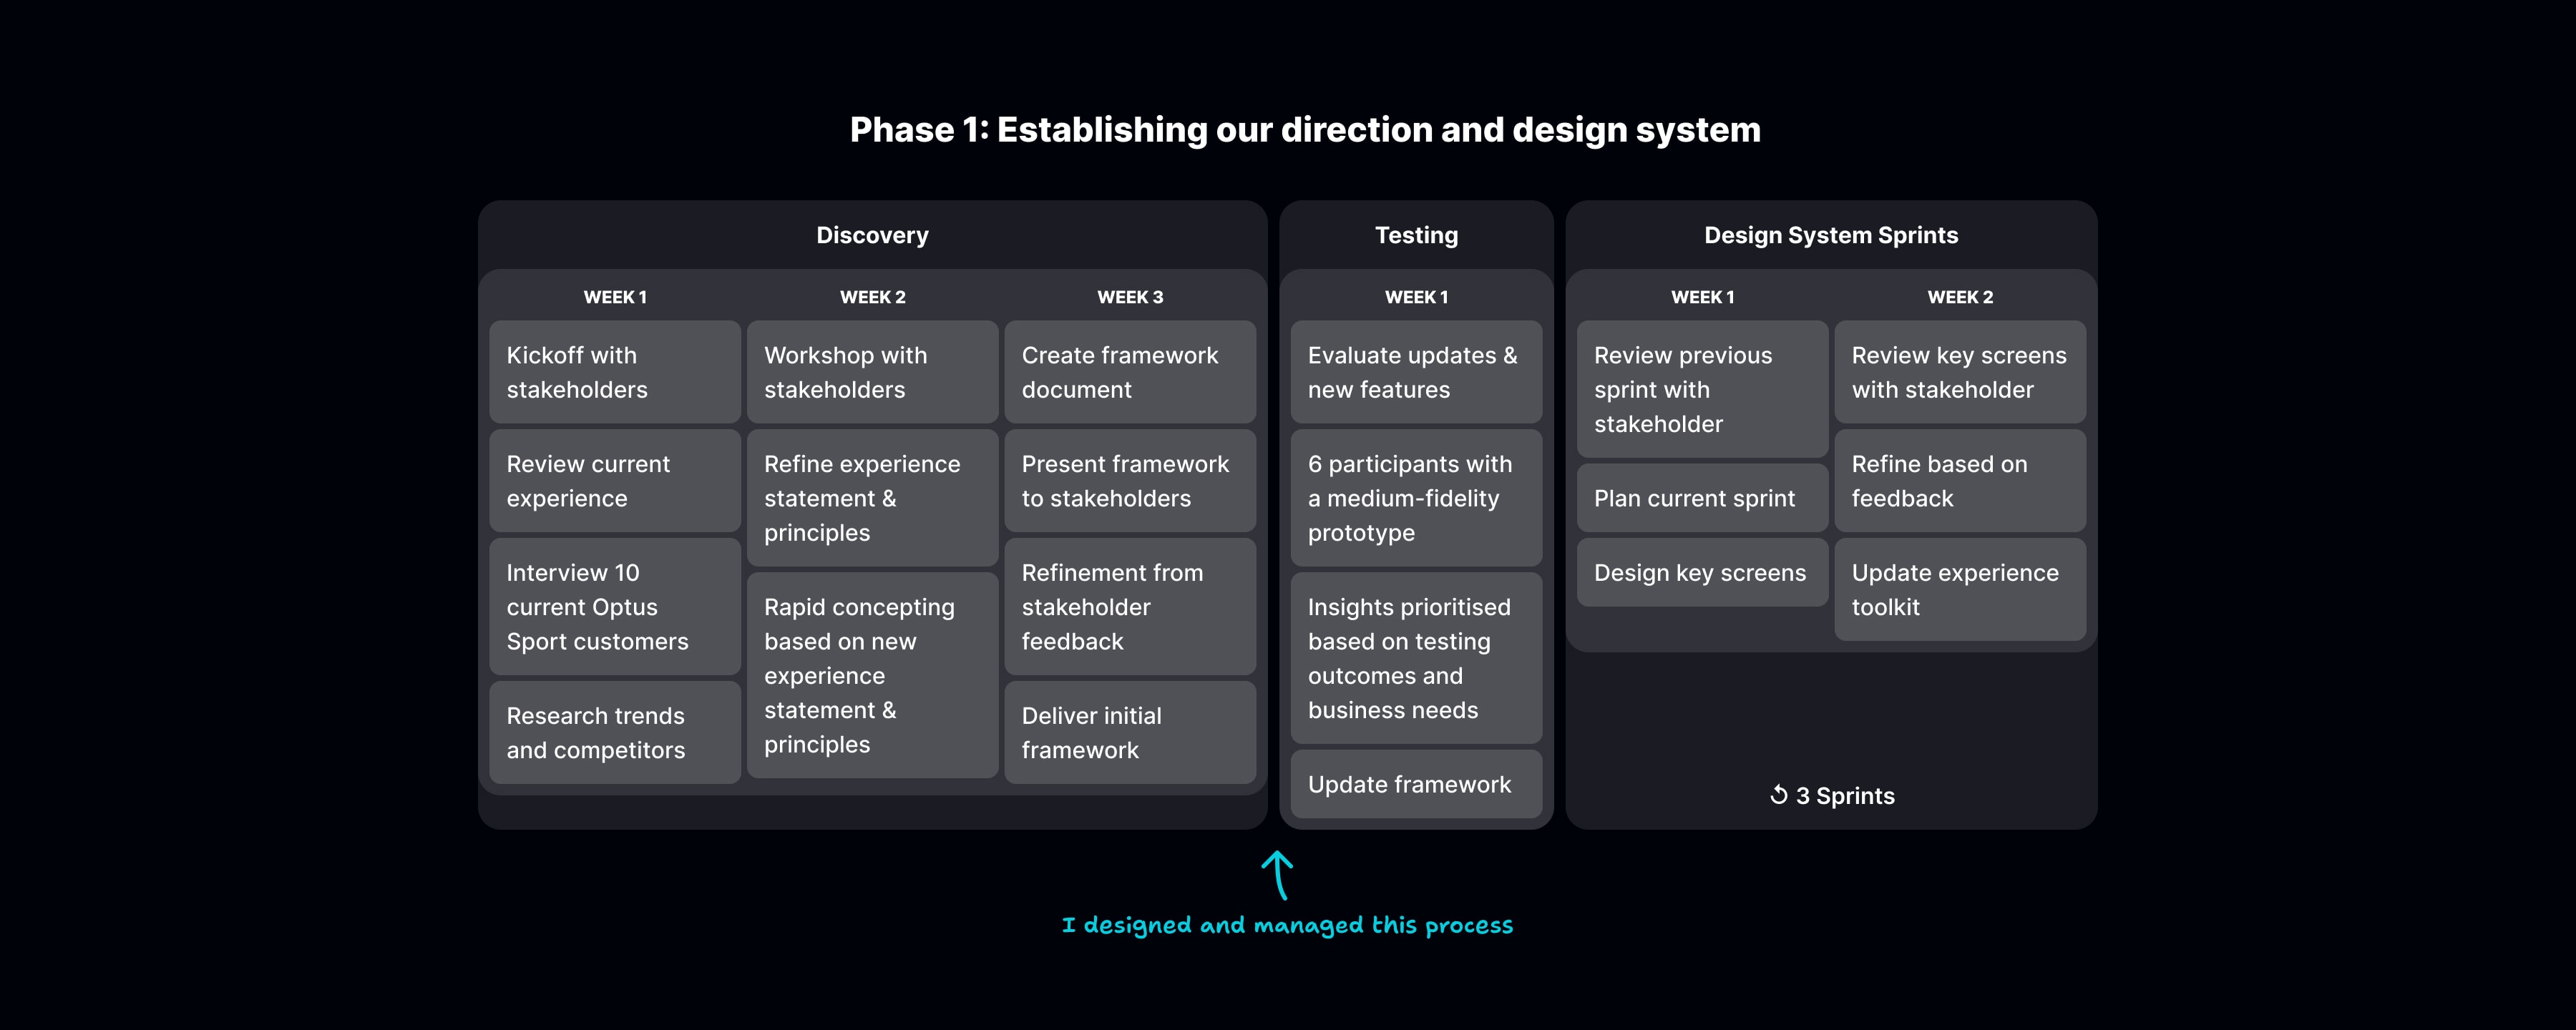 Phase 1: Establishing our direction & design system